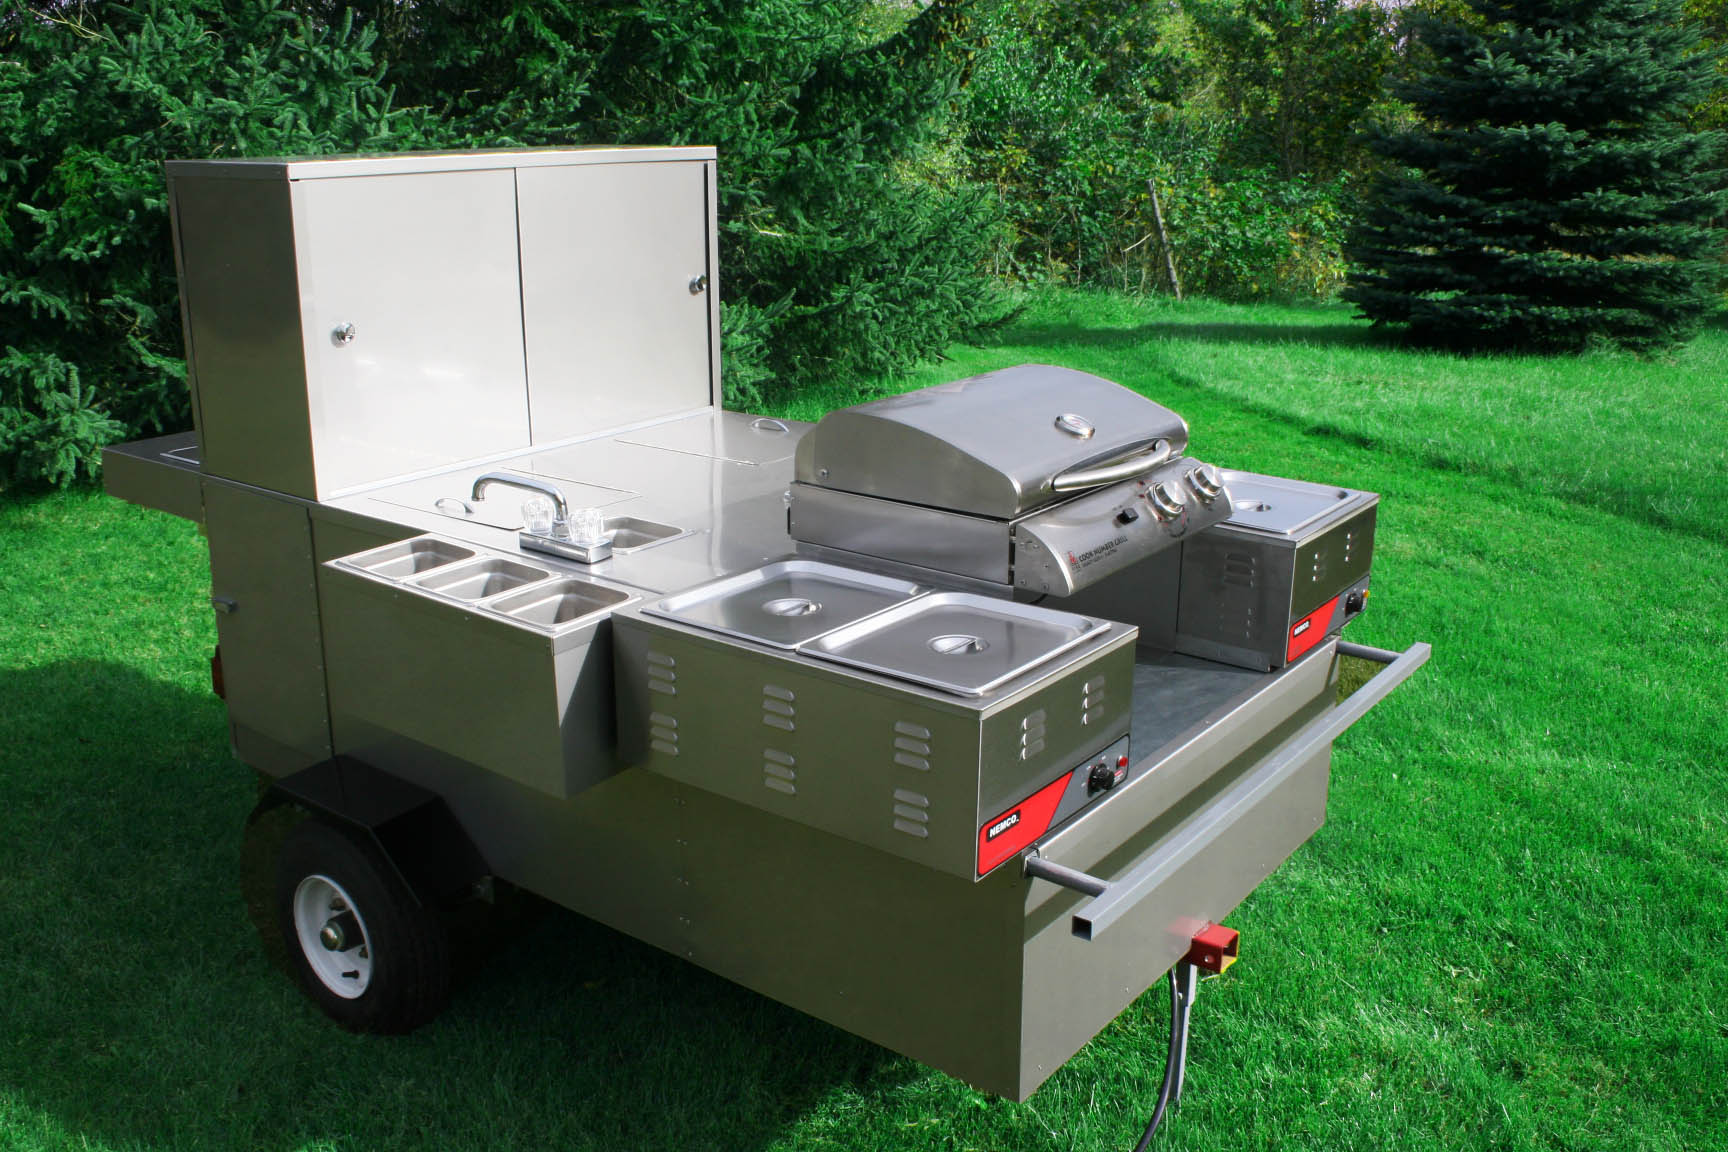 https://www.hotdogcartcompany.com/wp-content/uploads/2019/09/electric-hot-dog-cart-grill-hot-dog-cart-company-10.jpg